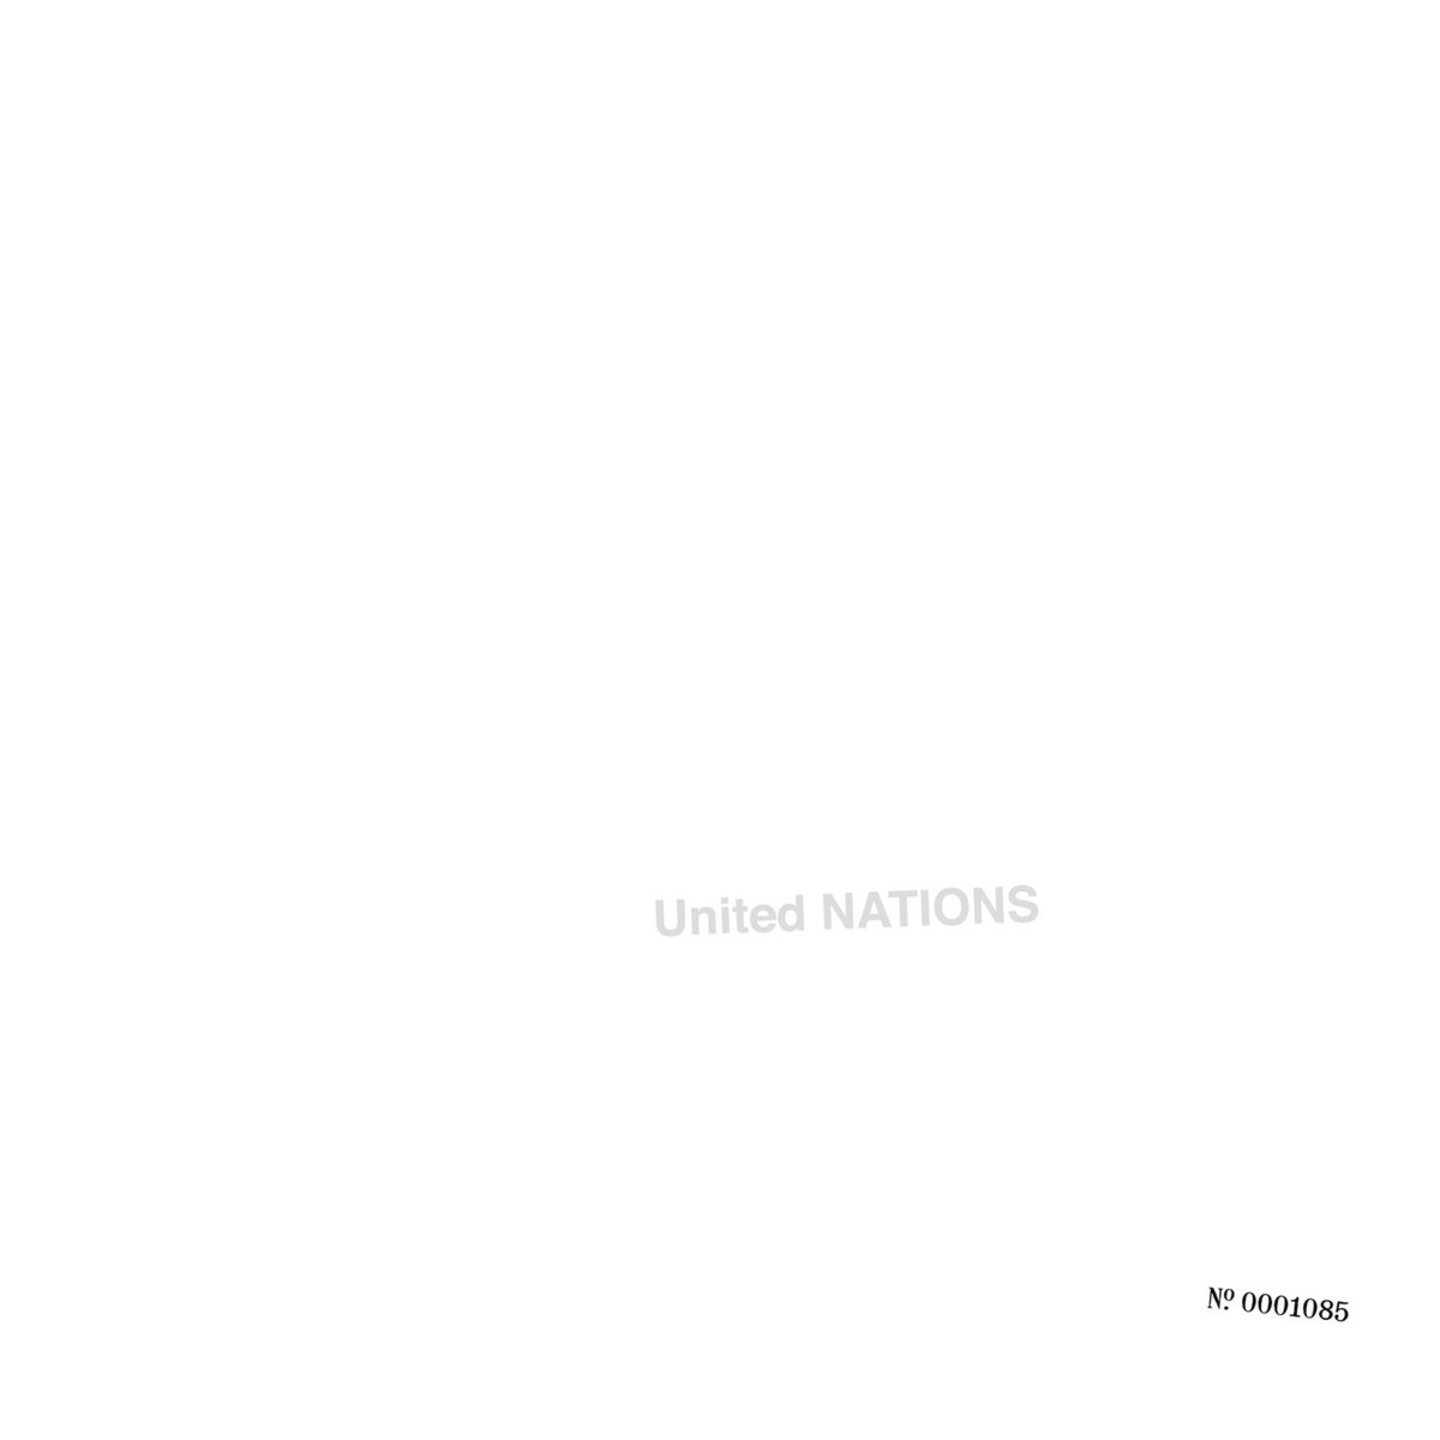 UNITED NATIONS - United Nations LP White vinyl